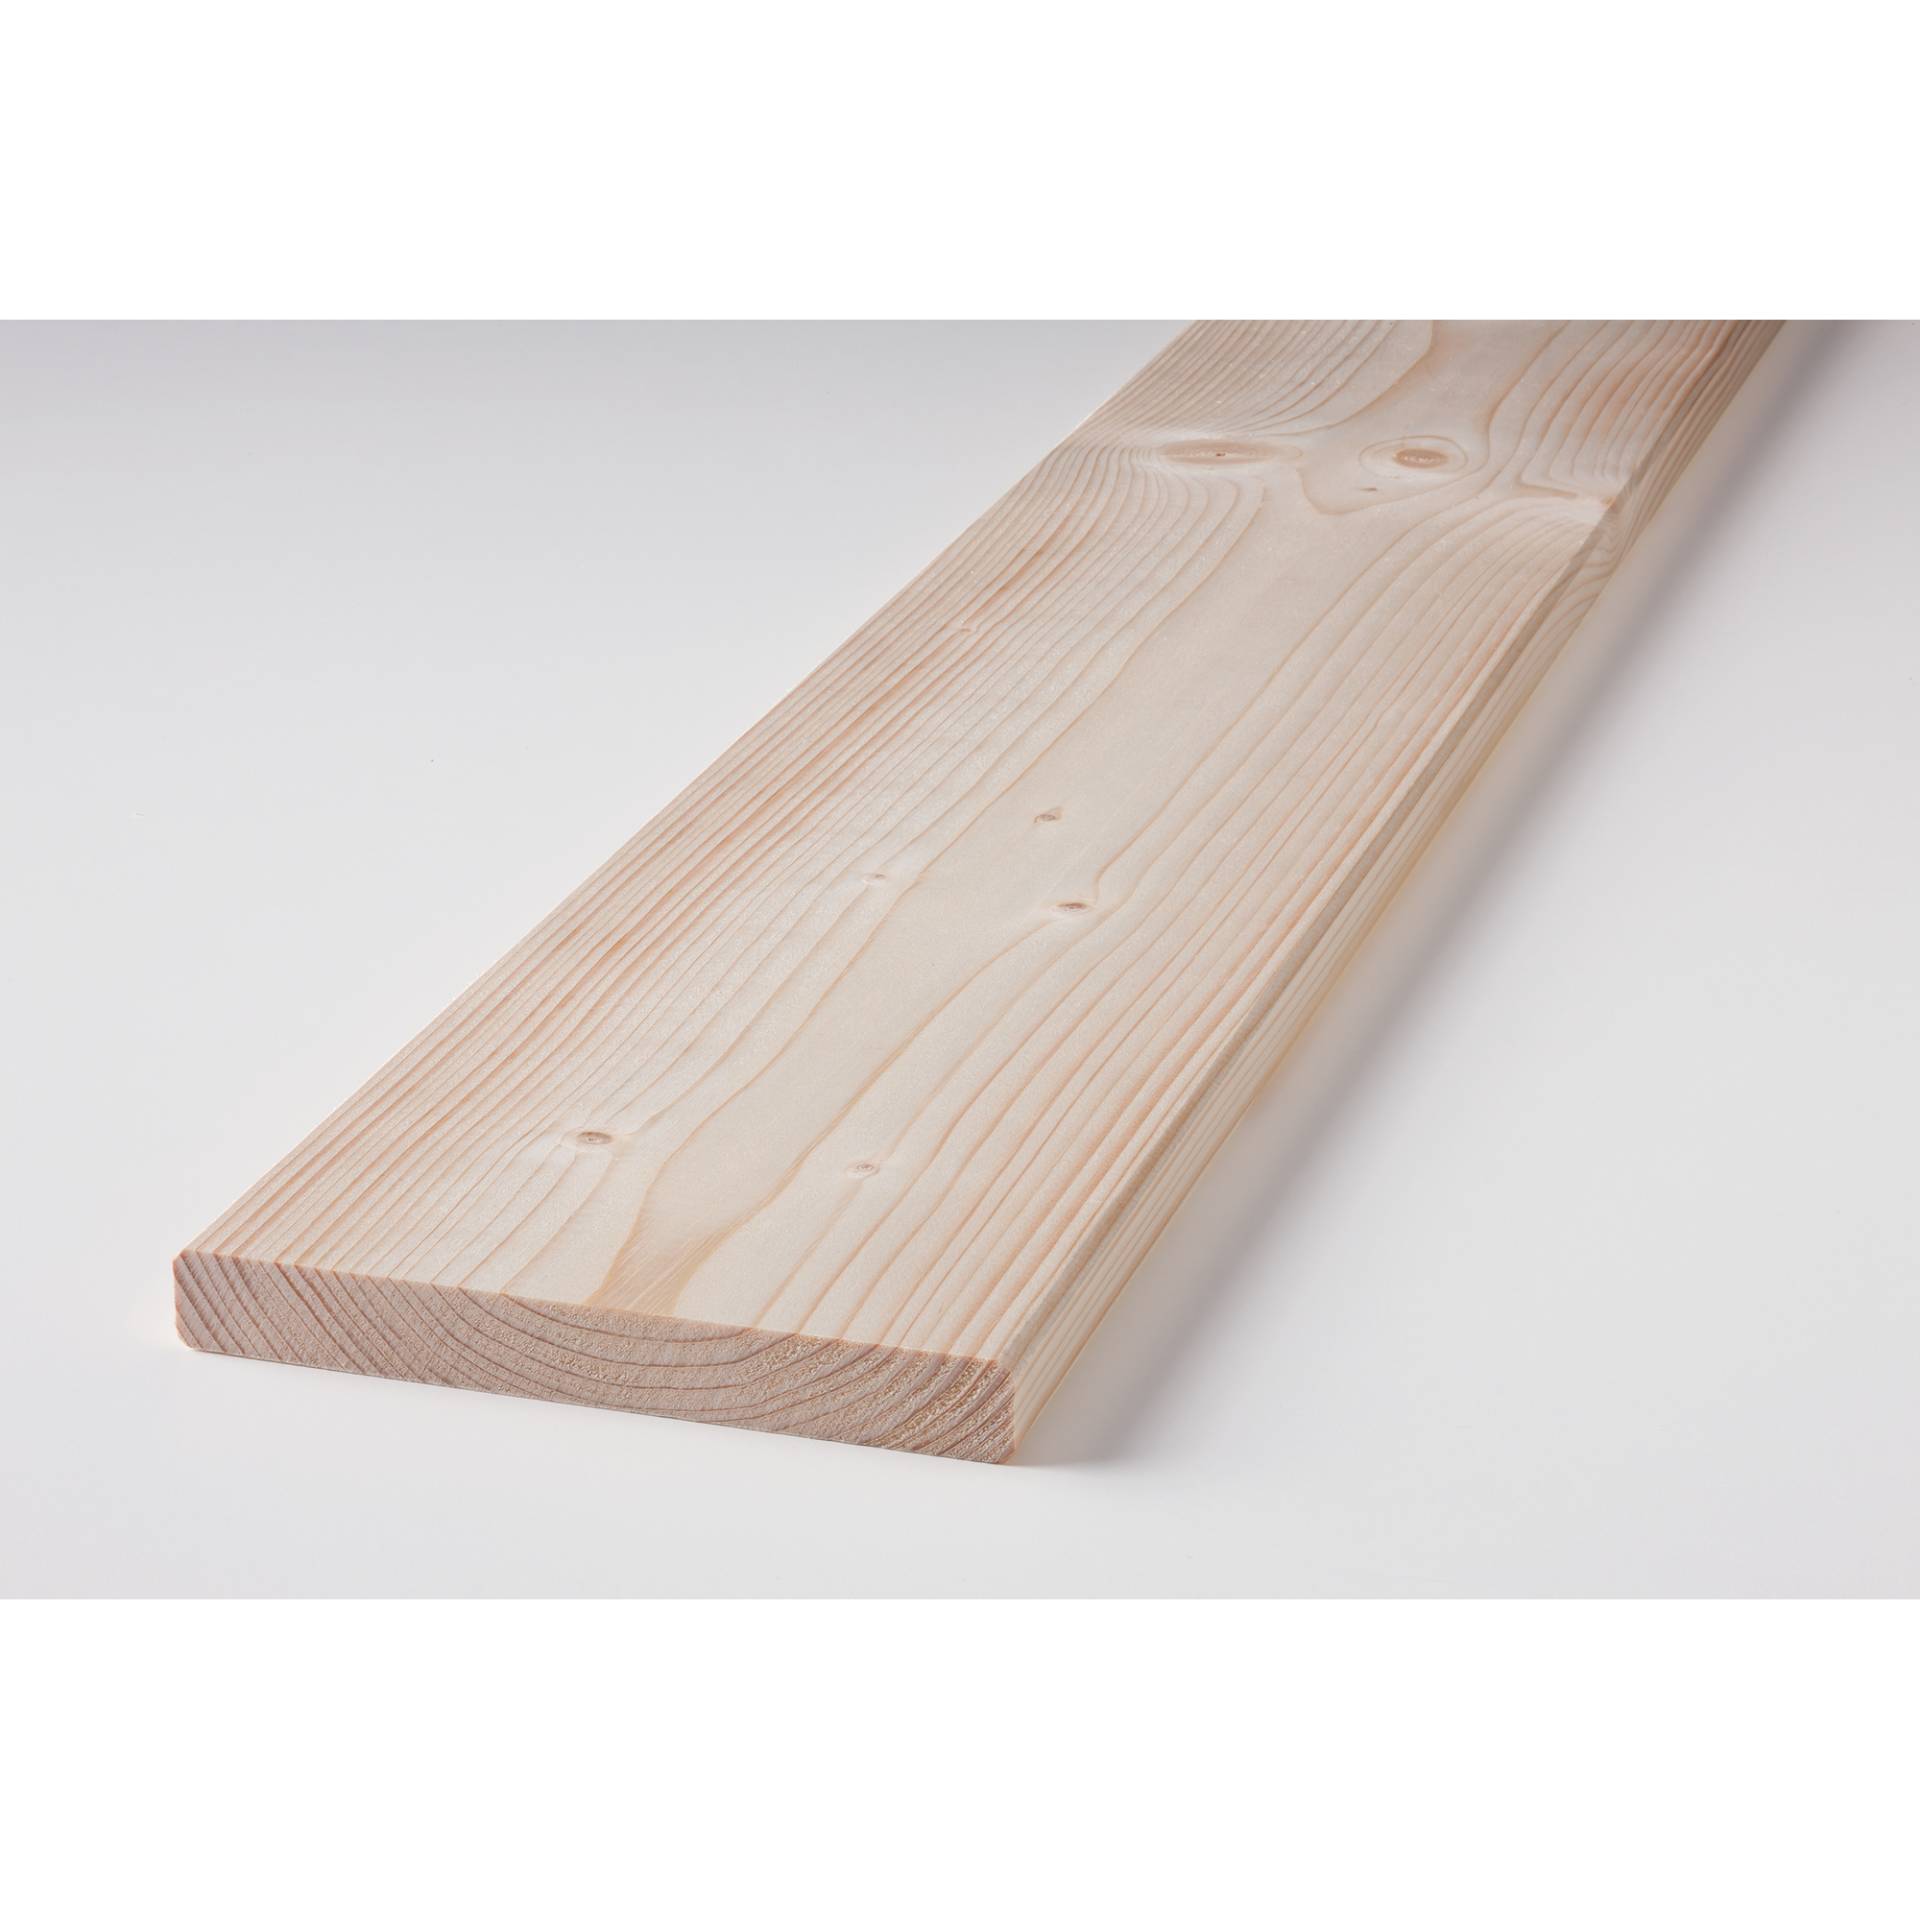 binderholz Glattkantbrett gehobelt 2000 x 140 x 18 mm von binderholz